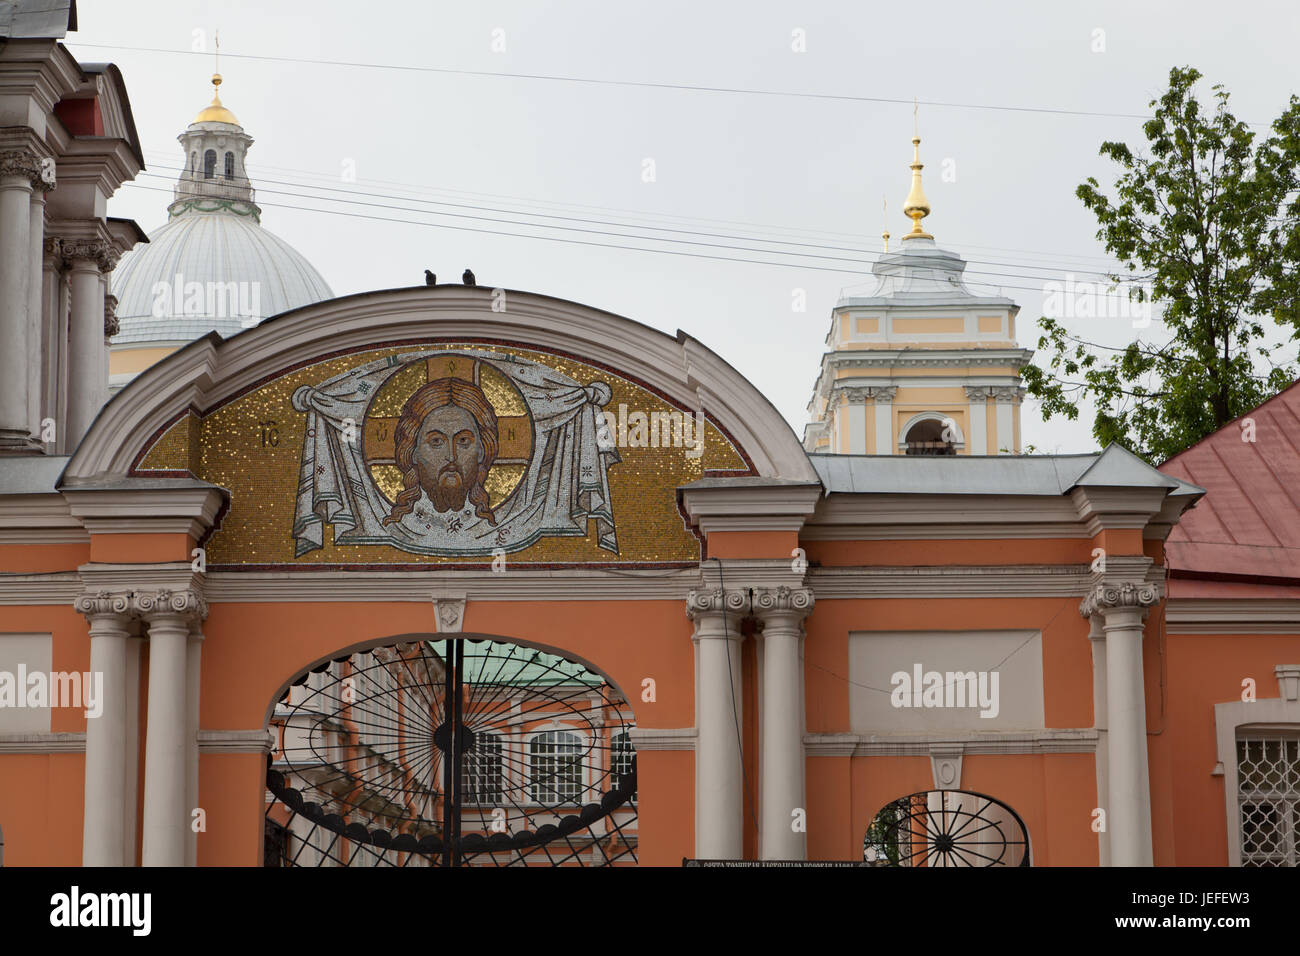 The Annunciation Gate. Alexander Nevsky Lavra or Alexander Nevsky Monastery. Saint Petersburg, Russia. Stock Photo